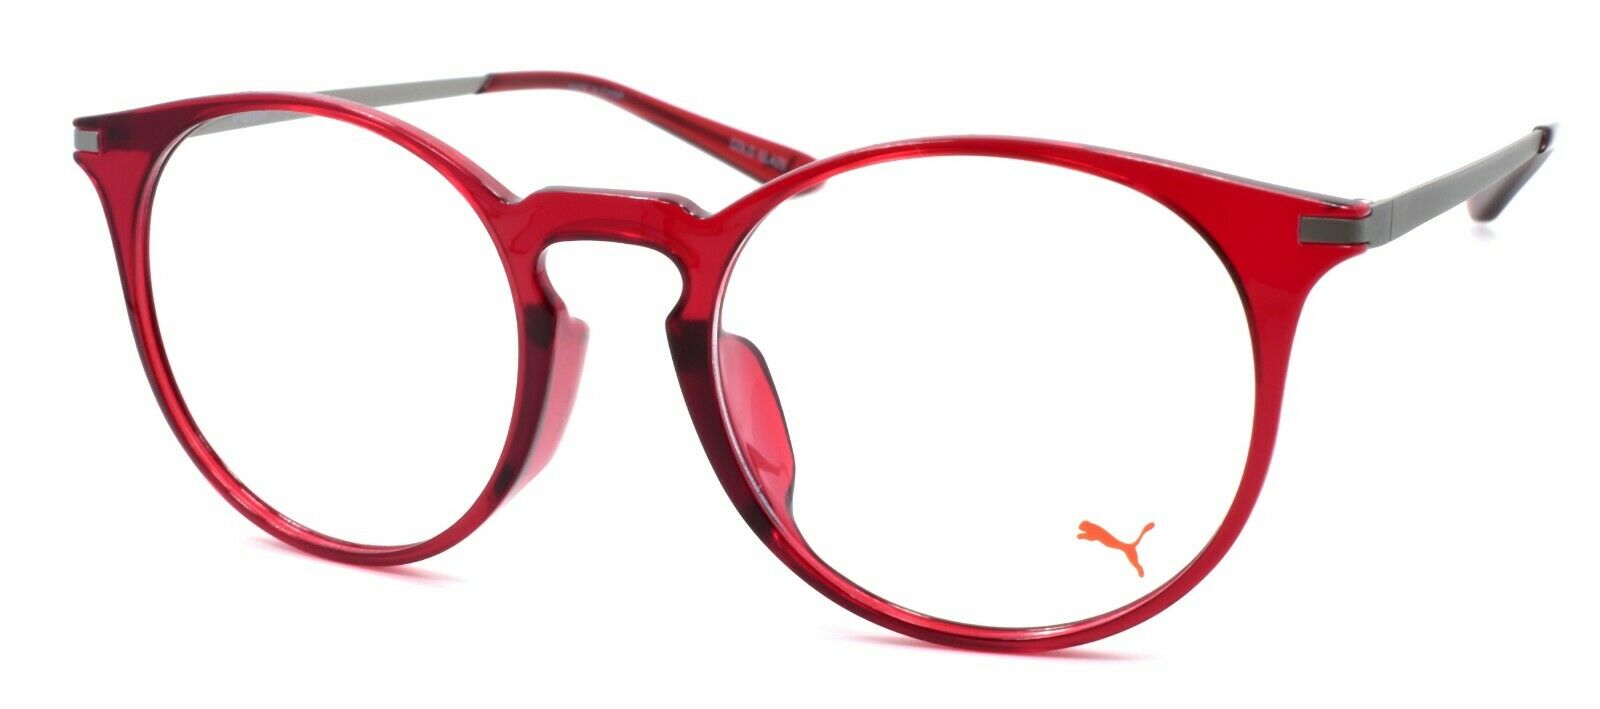 1-PUMA PU0116OA 004 Eyeglasses Frames Round 50-19-145 Burgundy Red / Silver-889652063836-IKSpecs